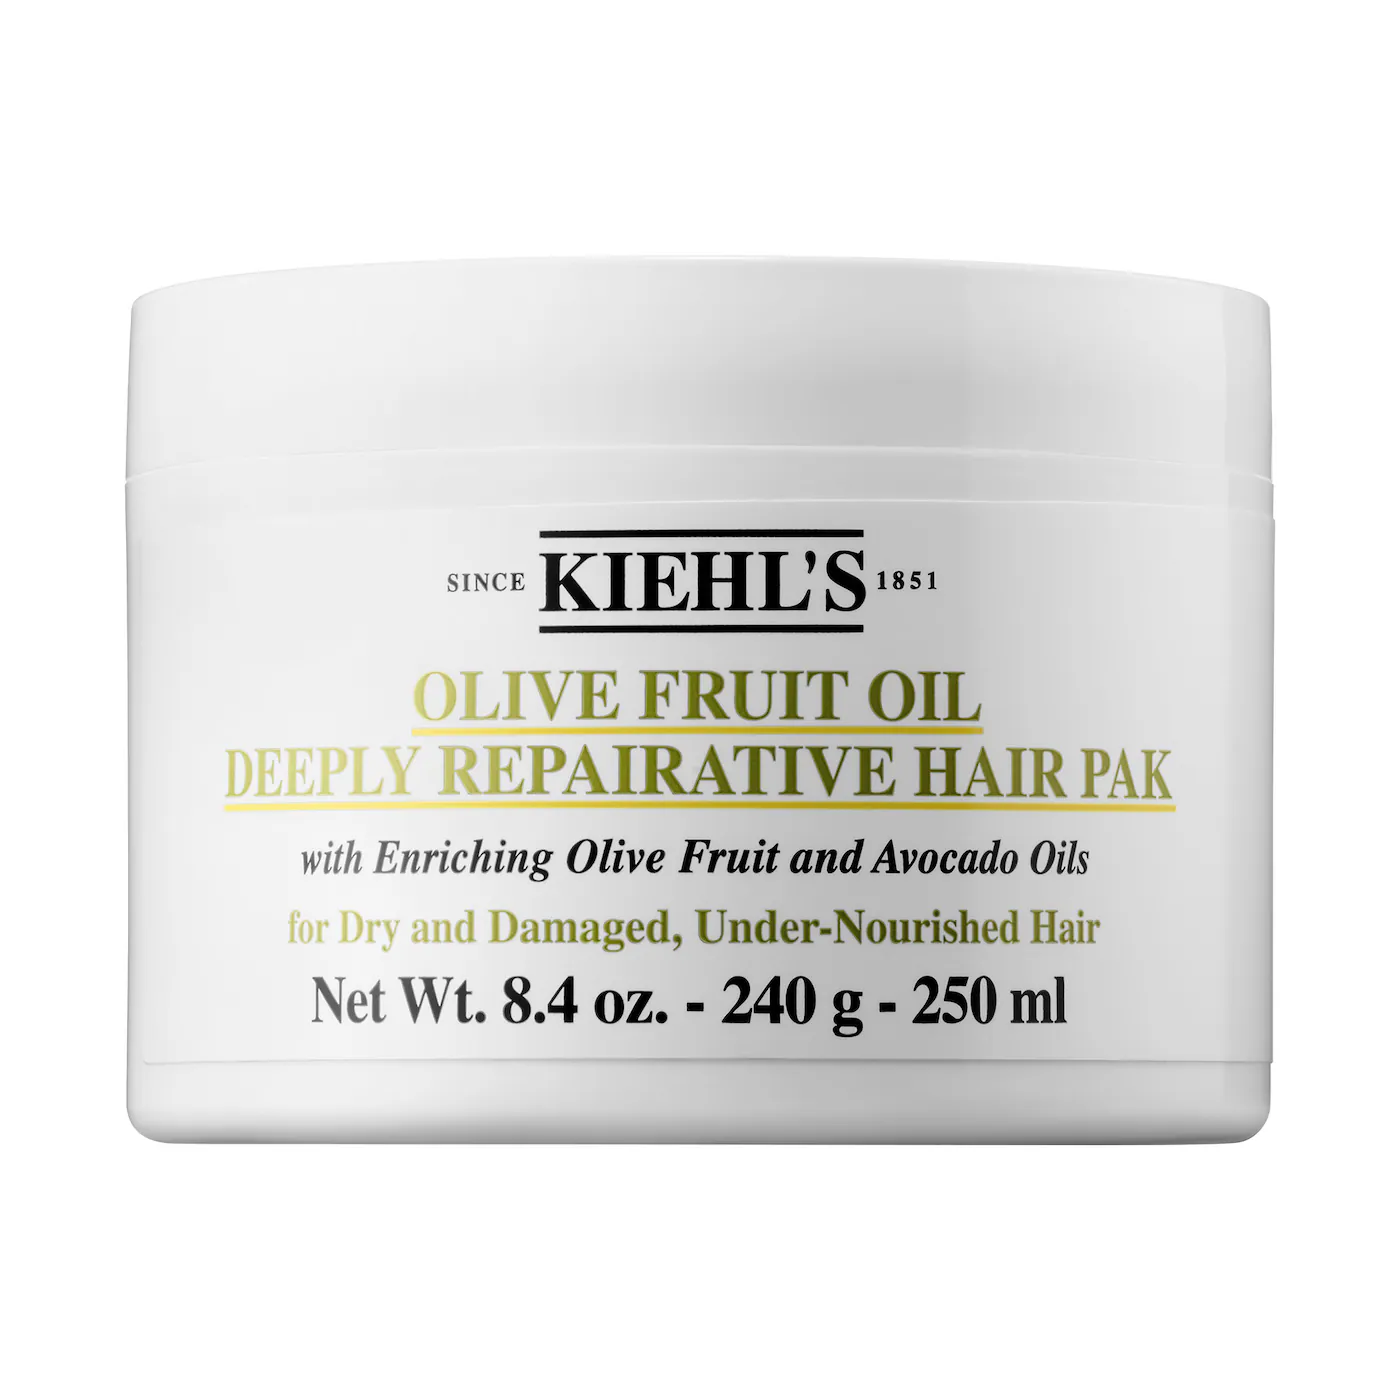 Kiehl’s Olive Fruit Oil Deeply Repairative Hair Pak